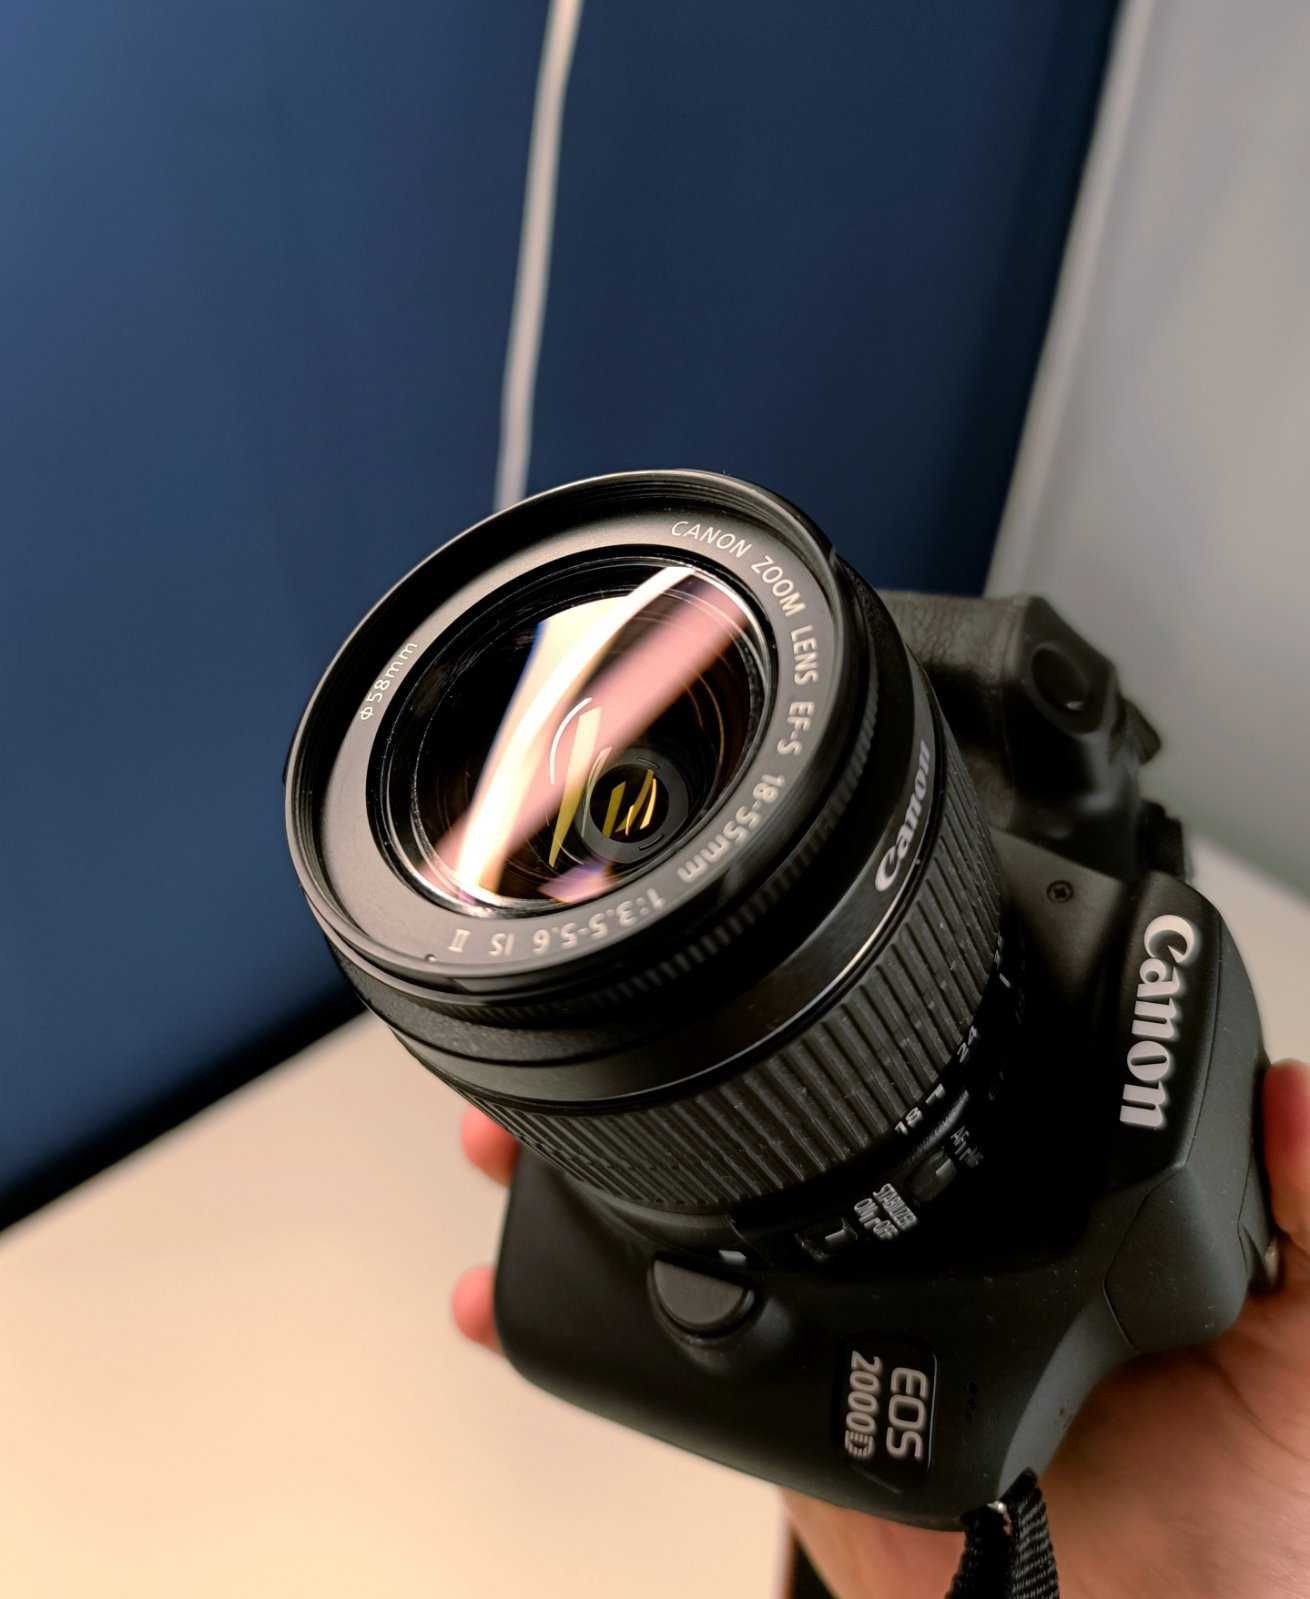 Canon EOS 2000D DSLR Фотоапарат- Перфектно състояние, като чисто нов.